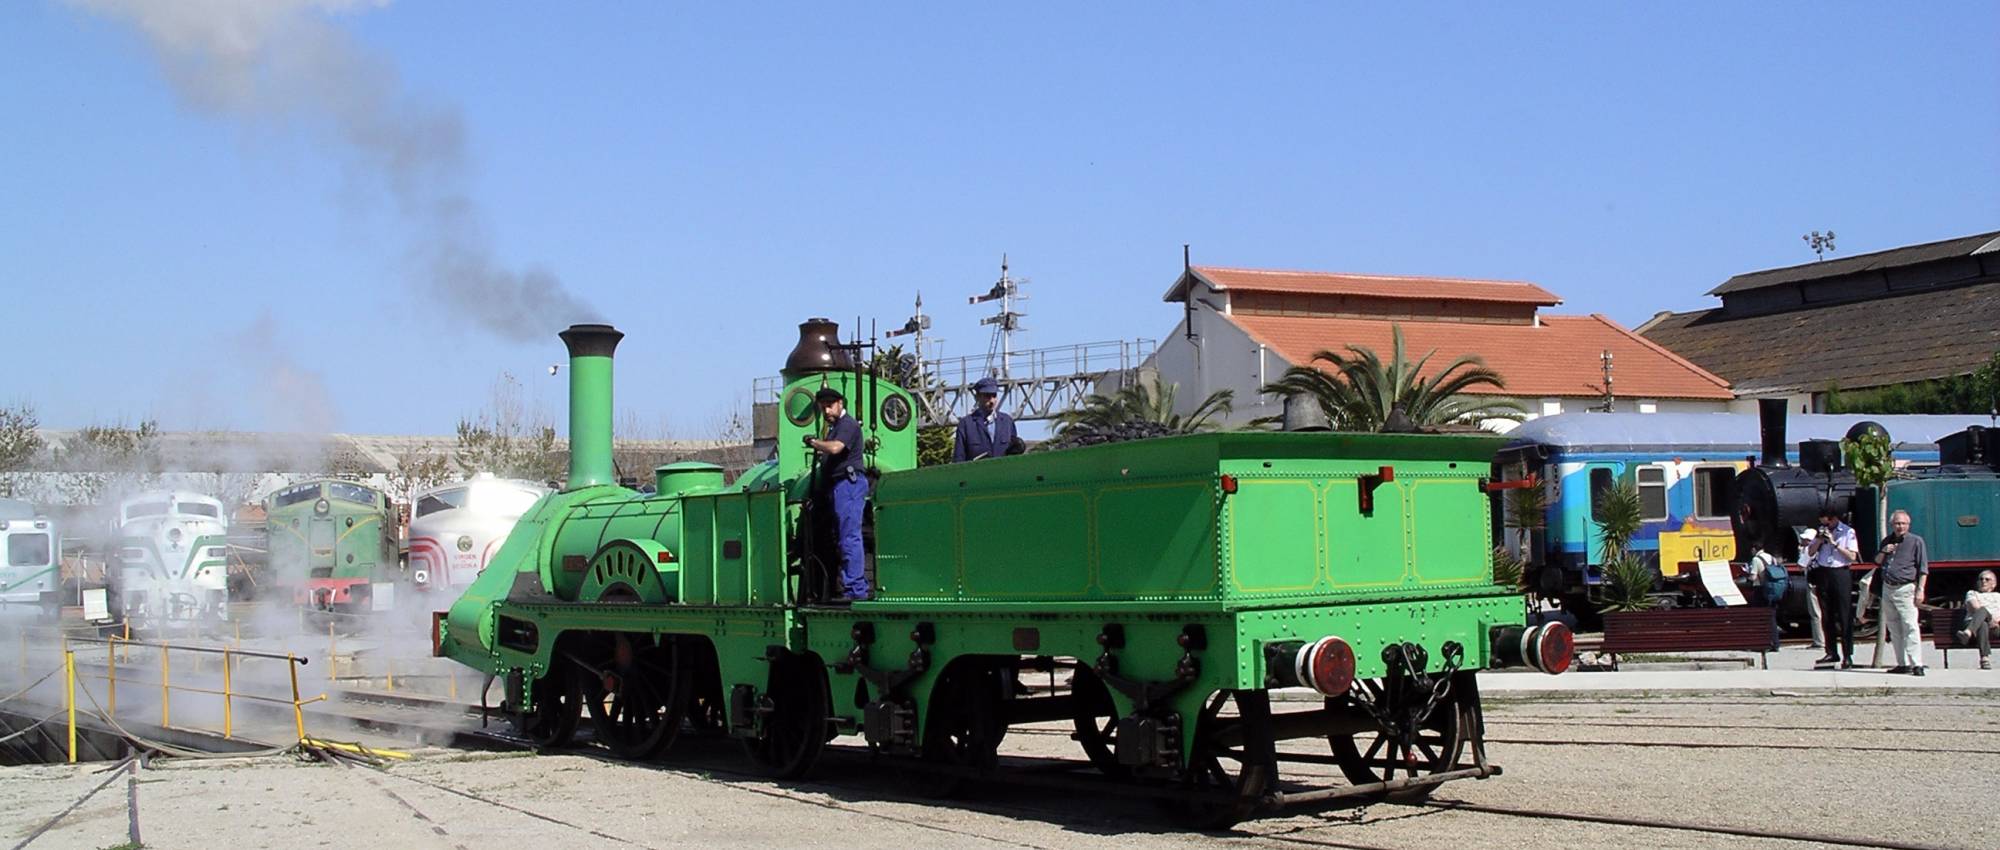 The Centenary Train 1848-1948 from the Railway Museum at Vilanova i la Geltrú. Nils Öberg / Wikimedia Commons. CC BY-SA 3.0